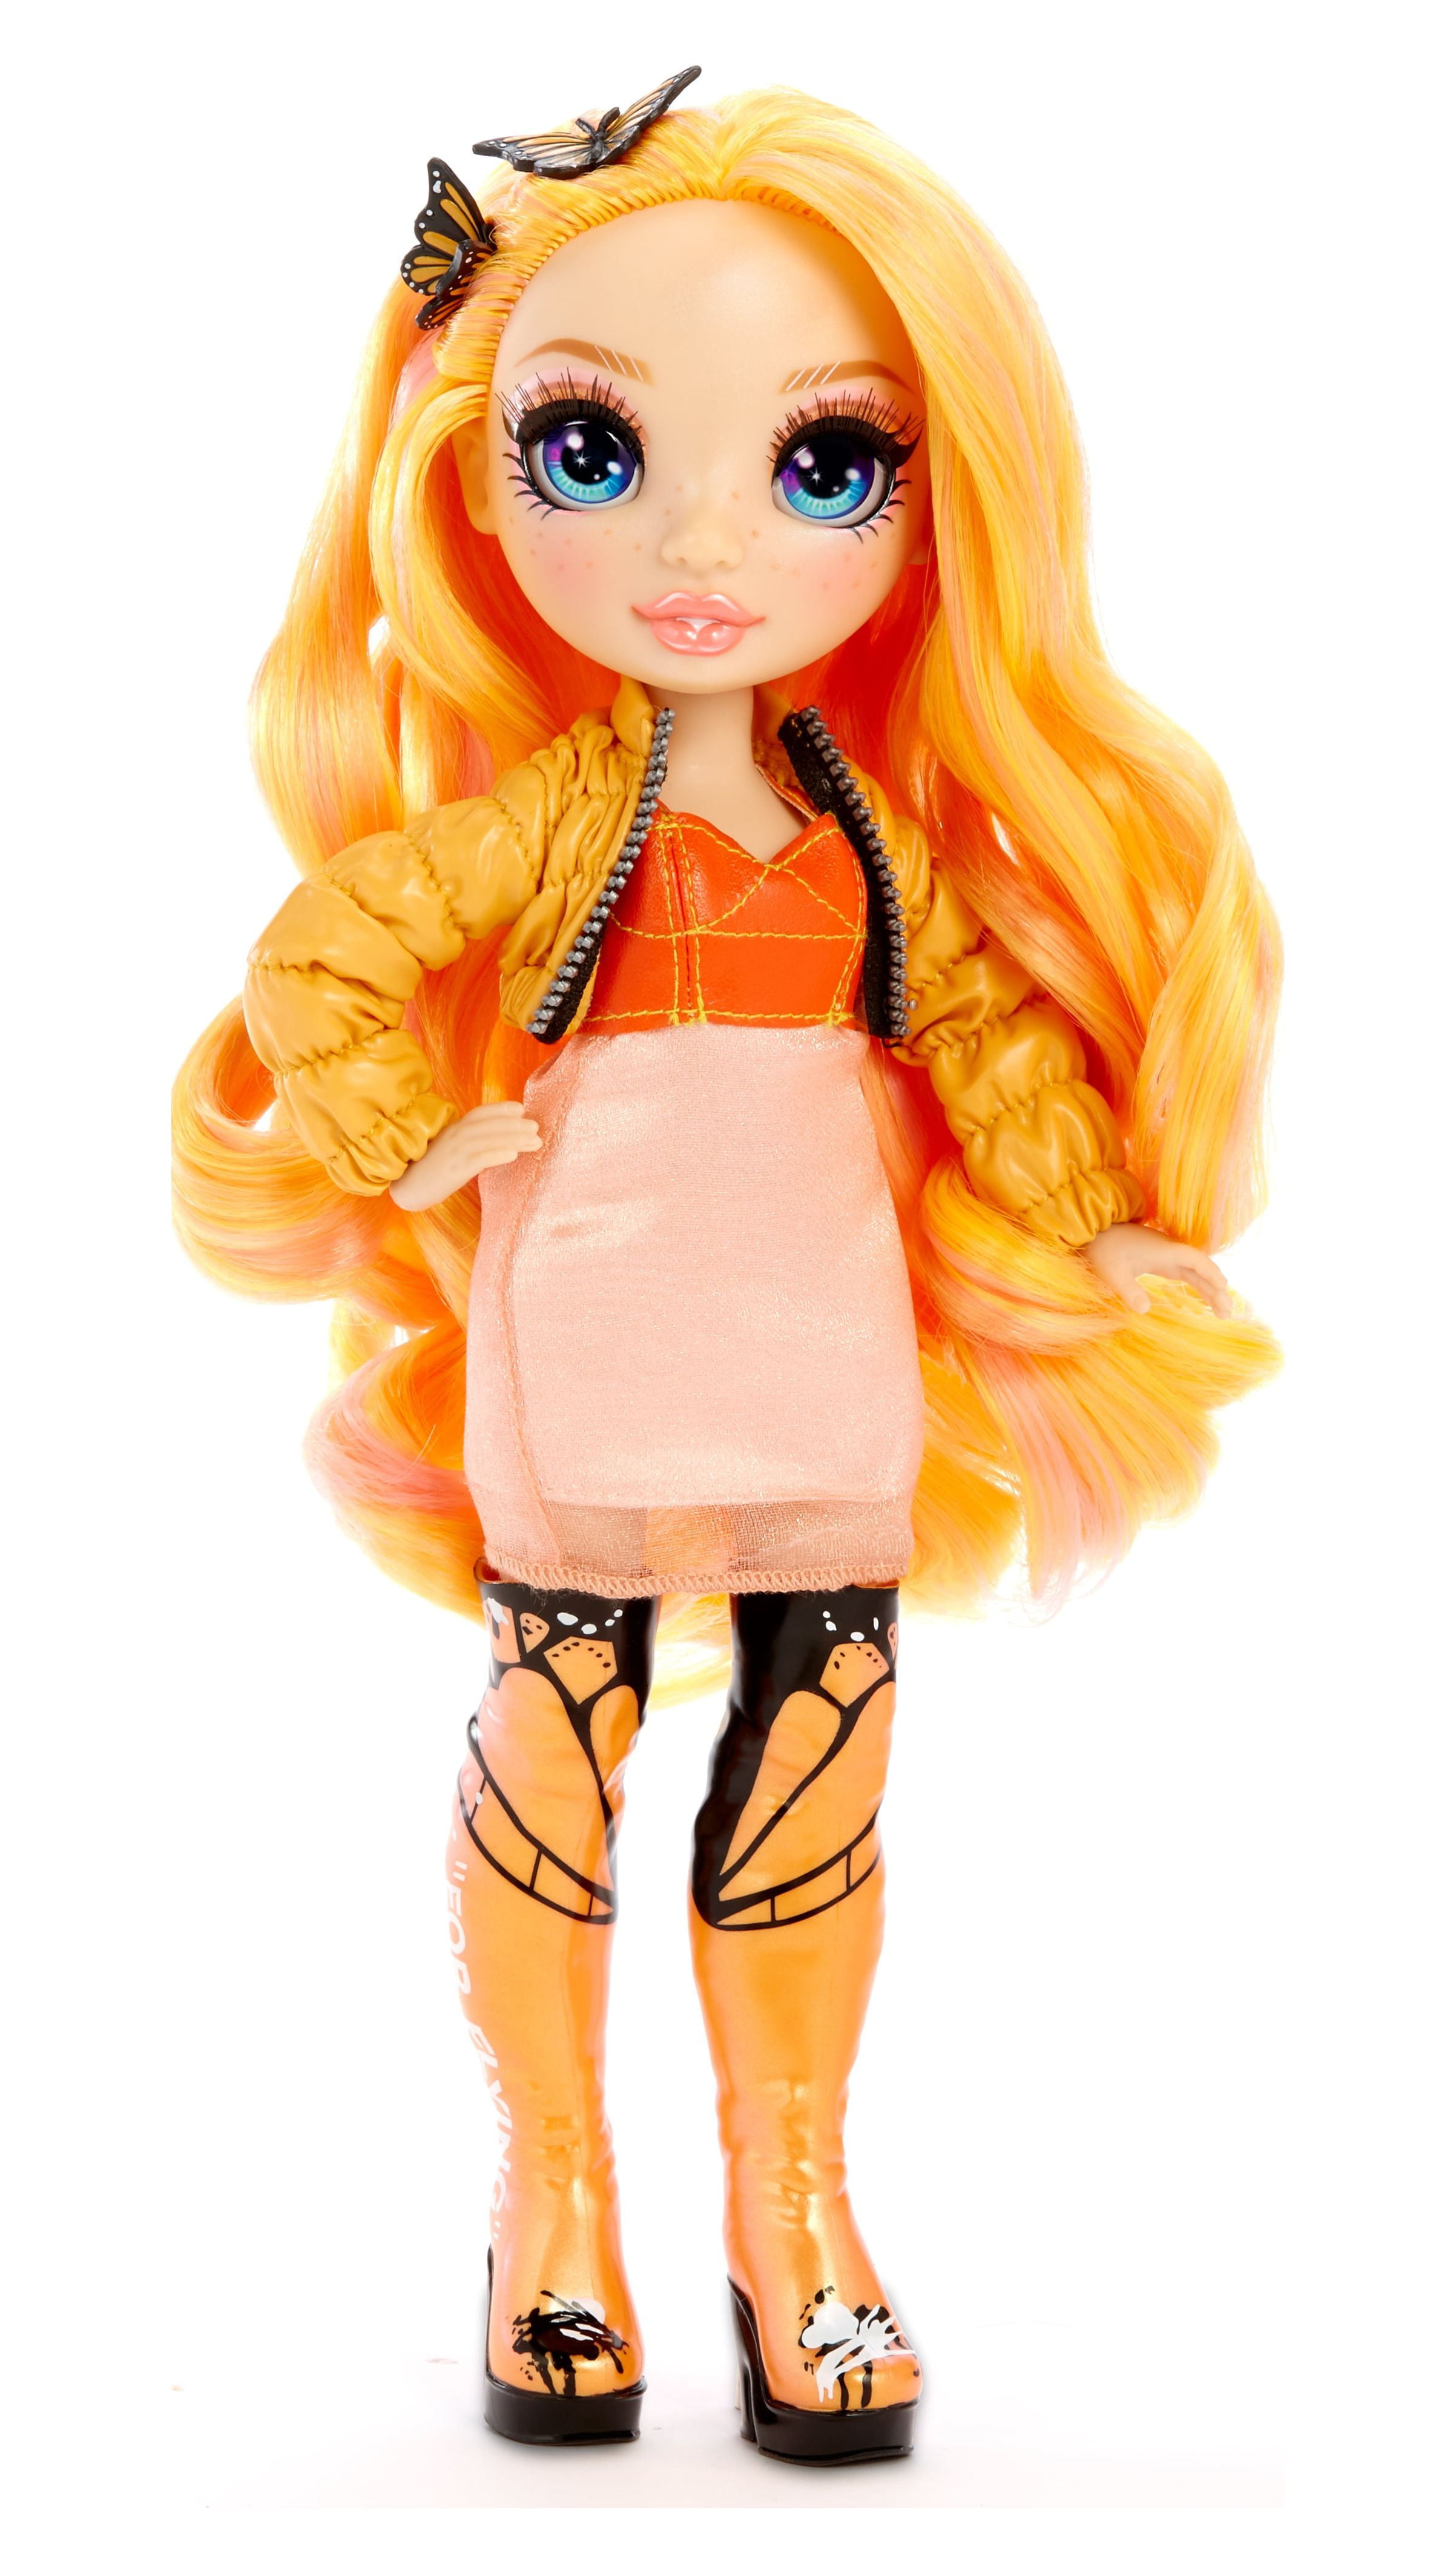 Rainbow High Cheer Poppy Rowan – Orange Fashion Doll with Pom Poms,  Cheerleader Doll, Toys for Kids 6-12 Years Old